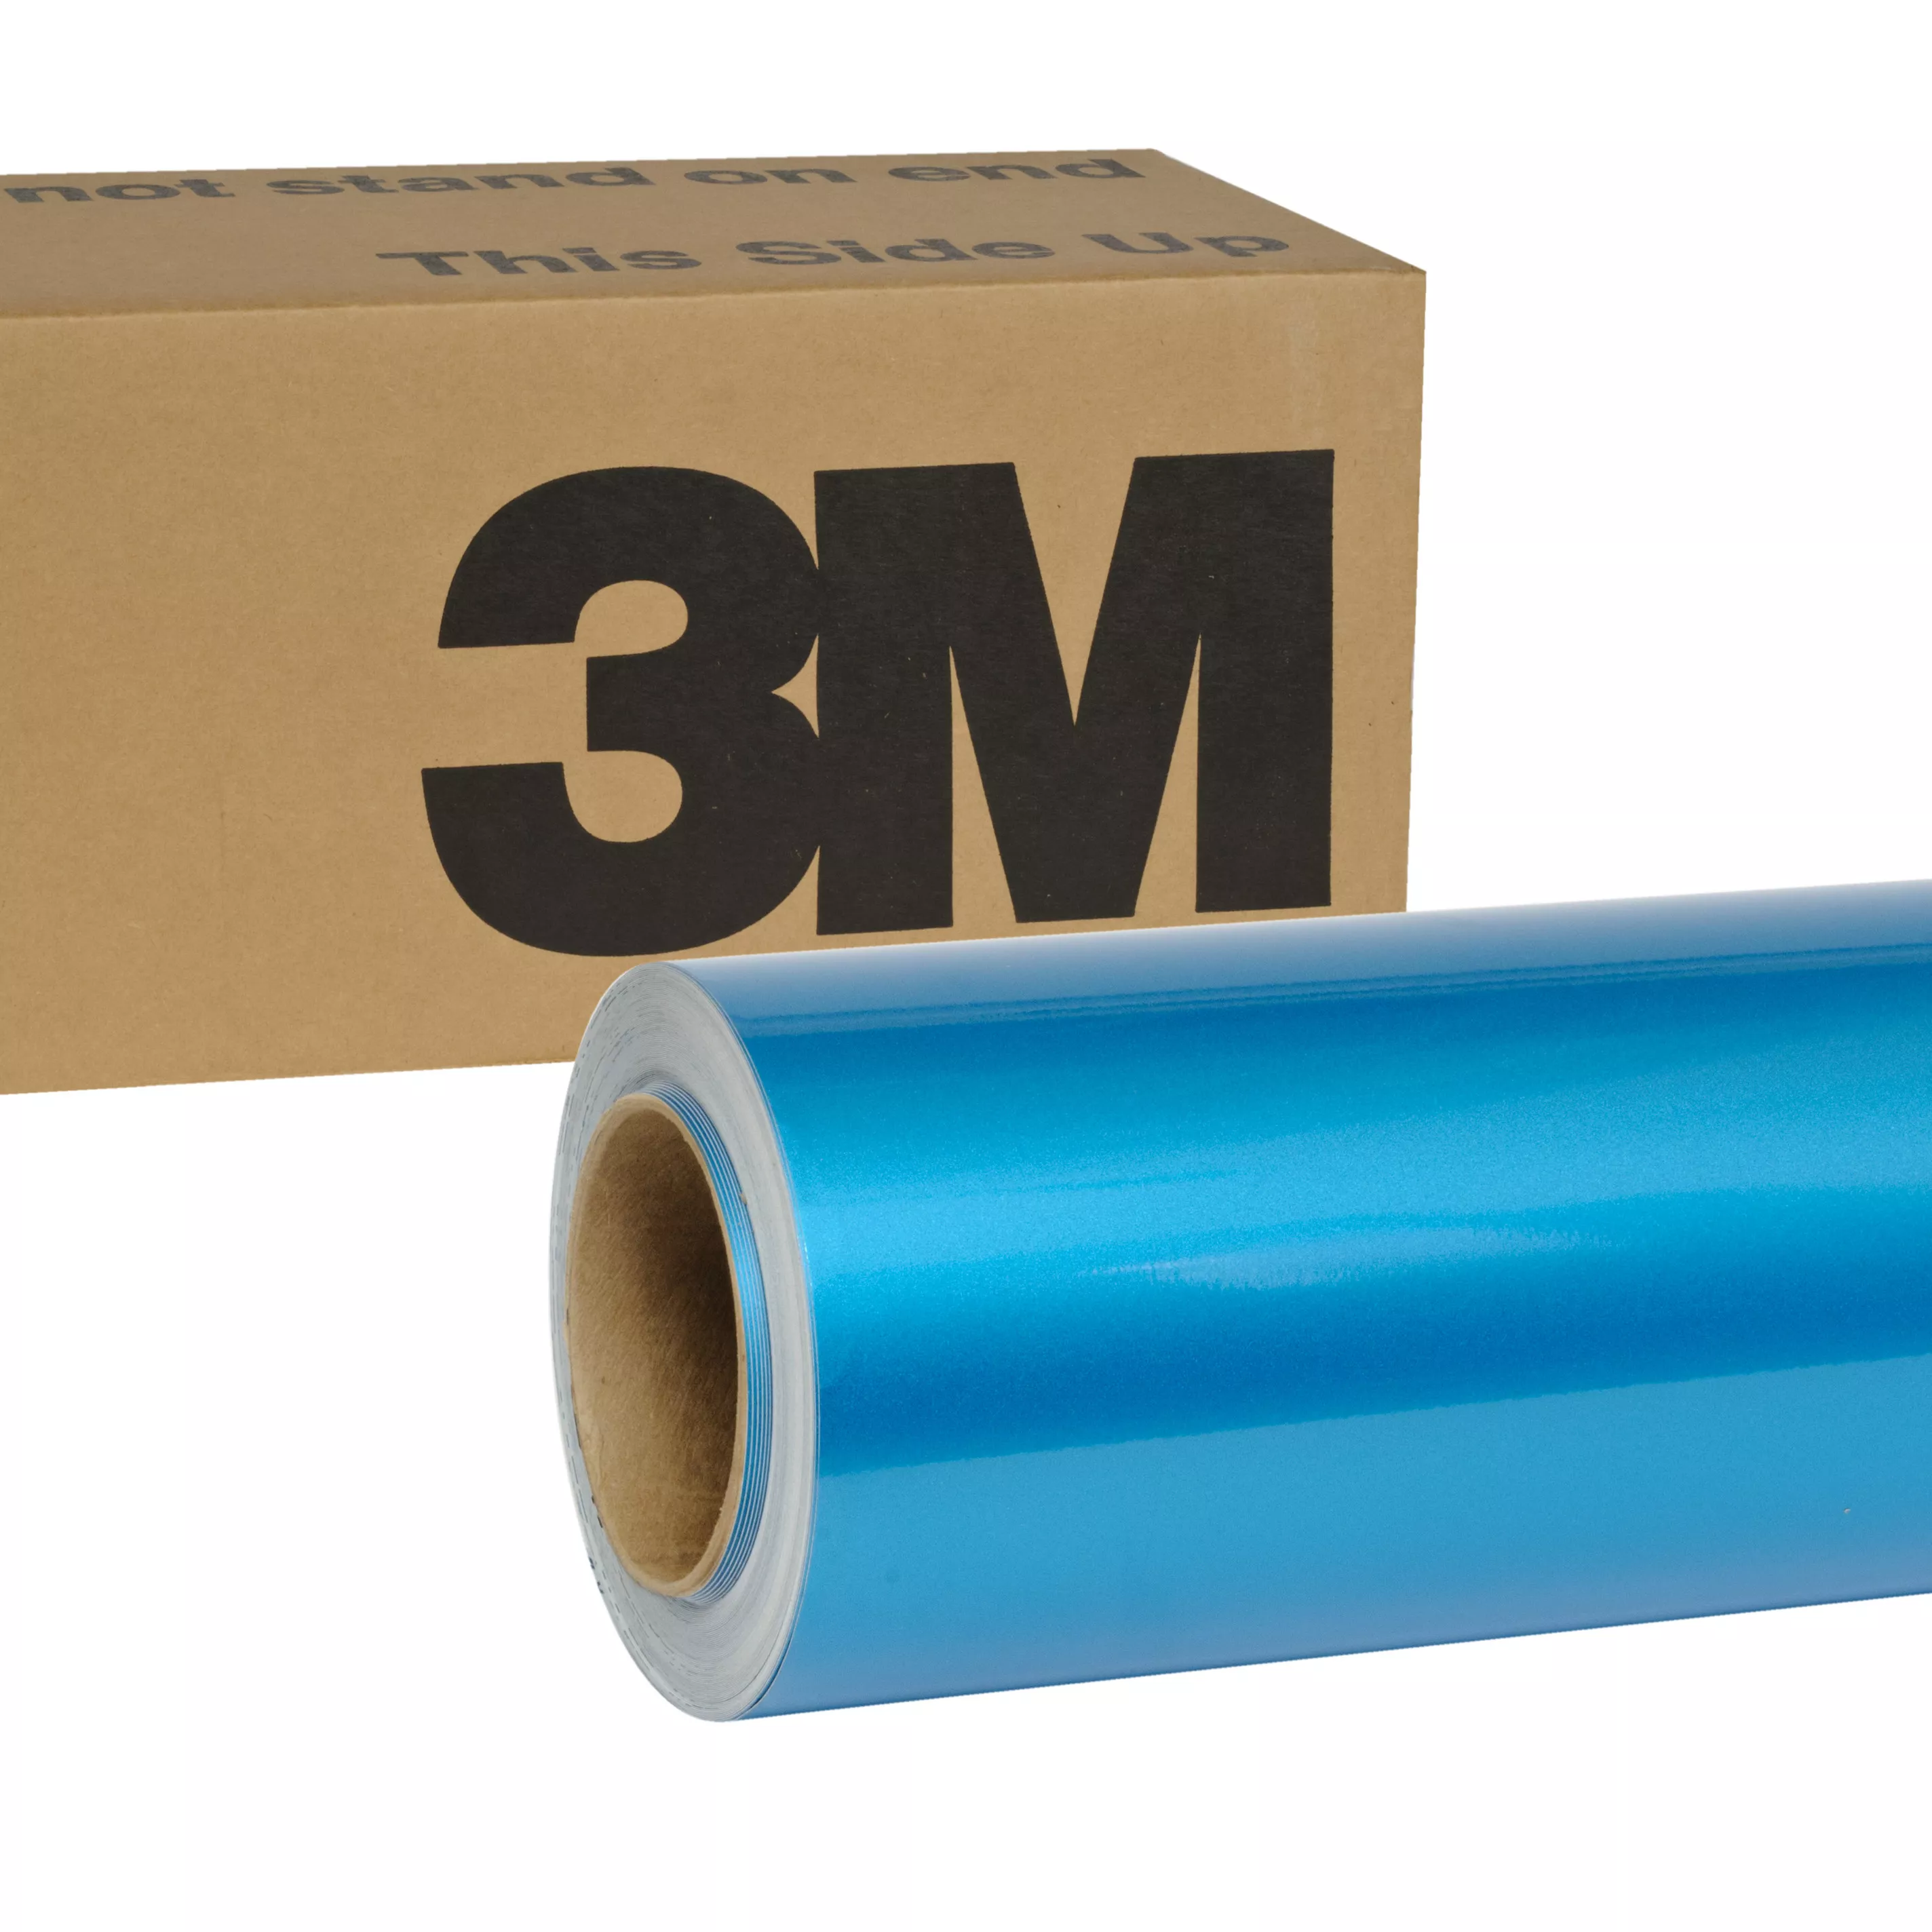 3M™ Wrap Film Series 1080-G356, Gloss Atomic Teal, 60 in x 5 yd